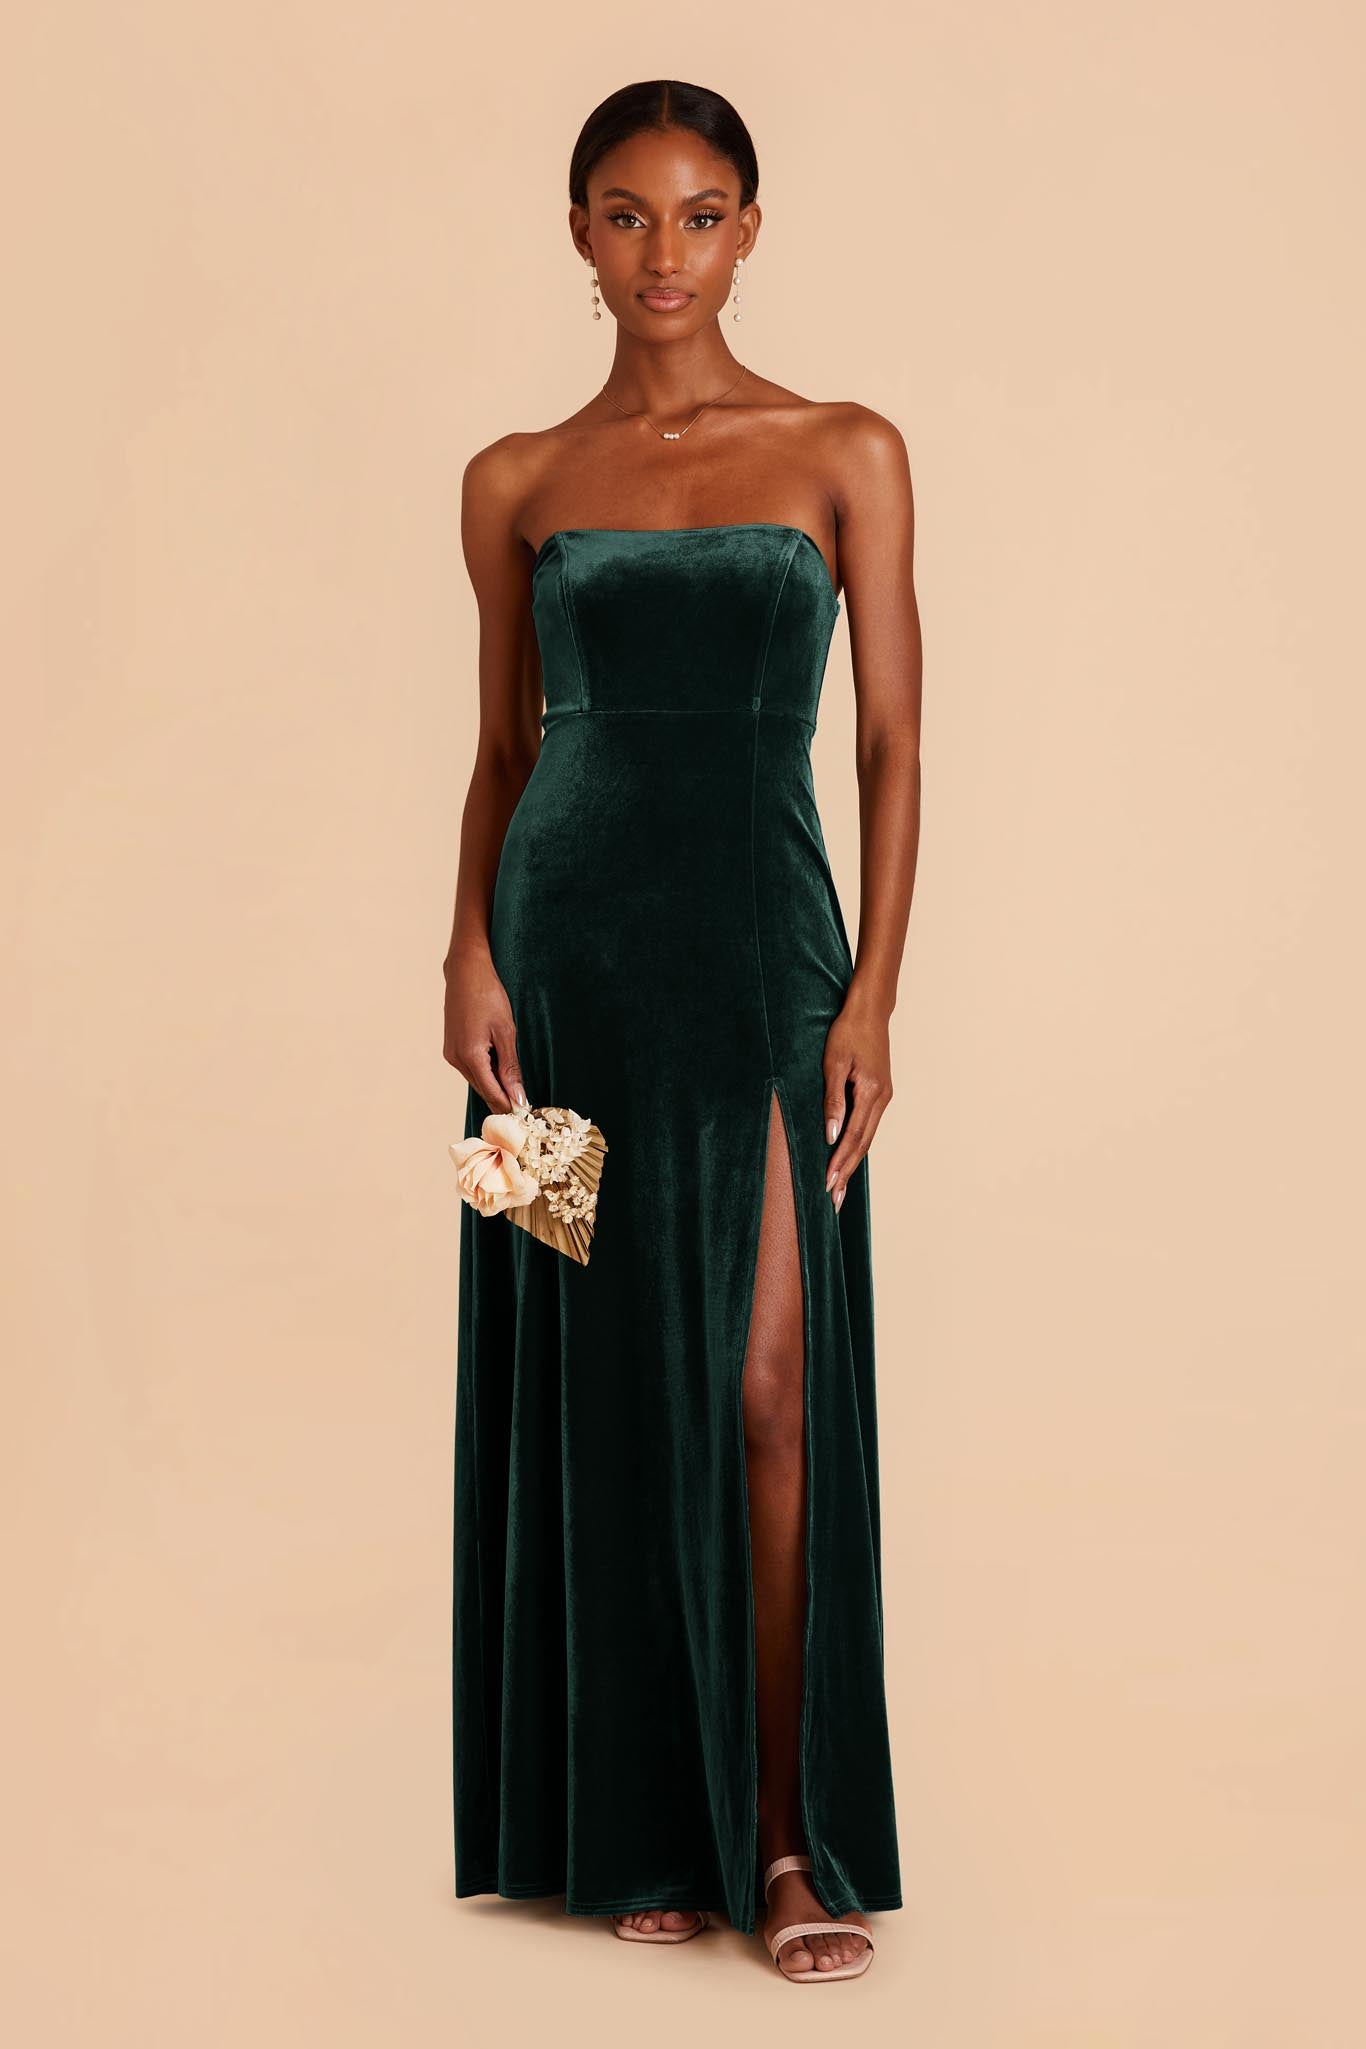 Emerald August Velvet Dress by Birdy Grey